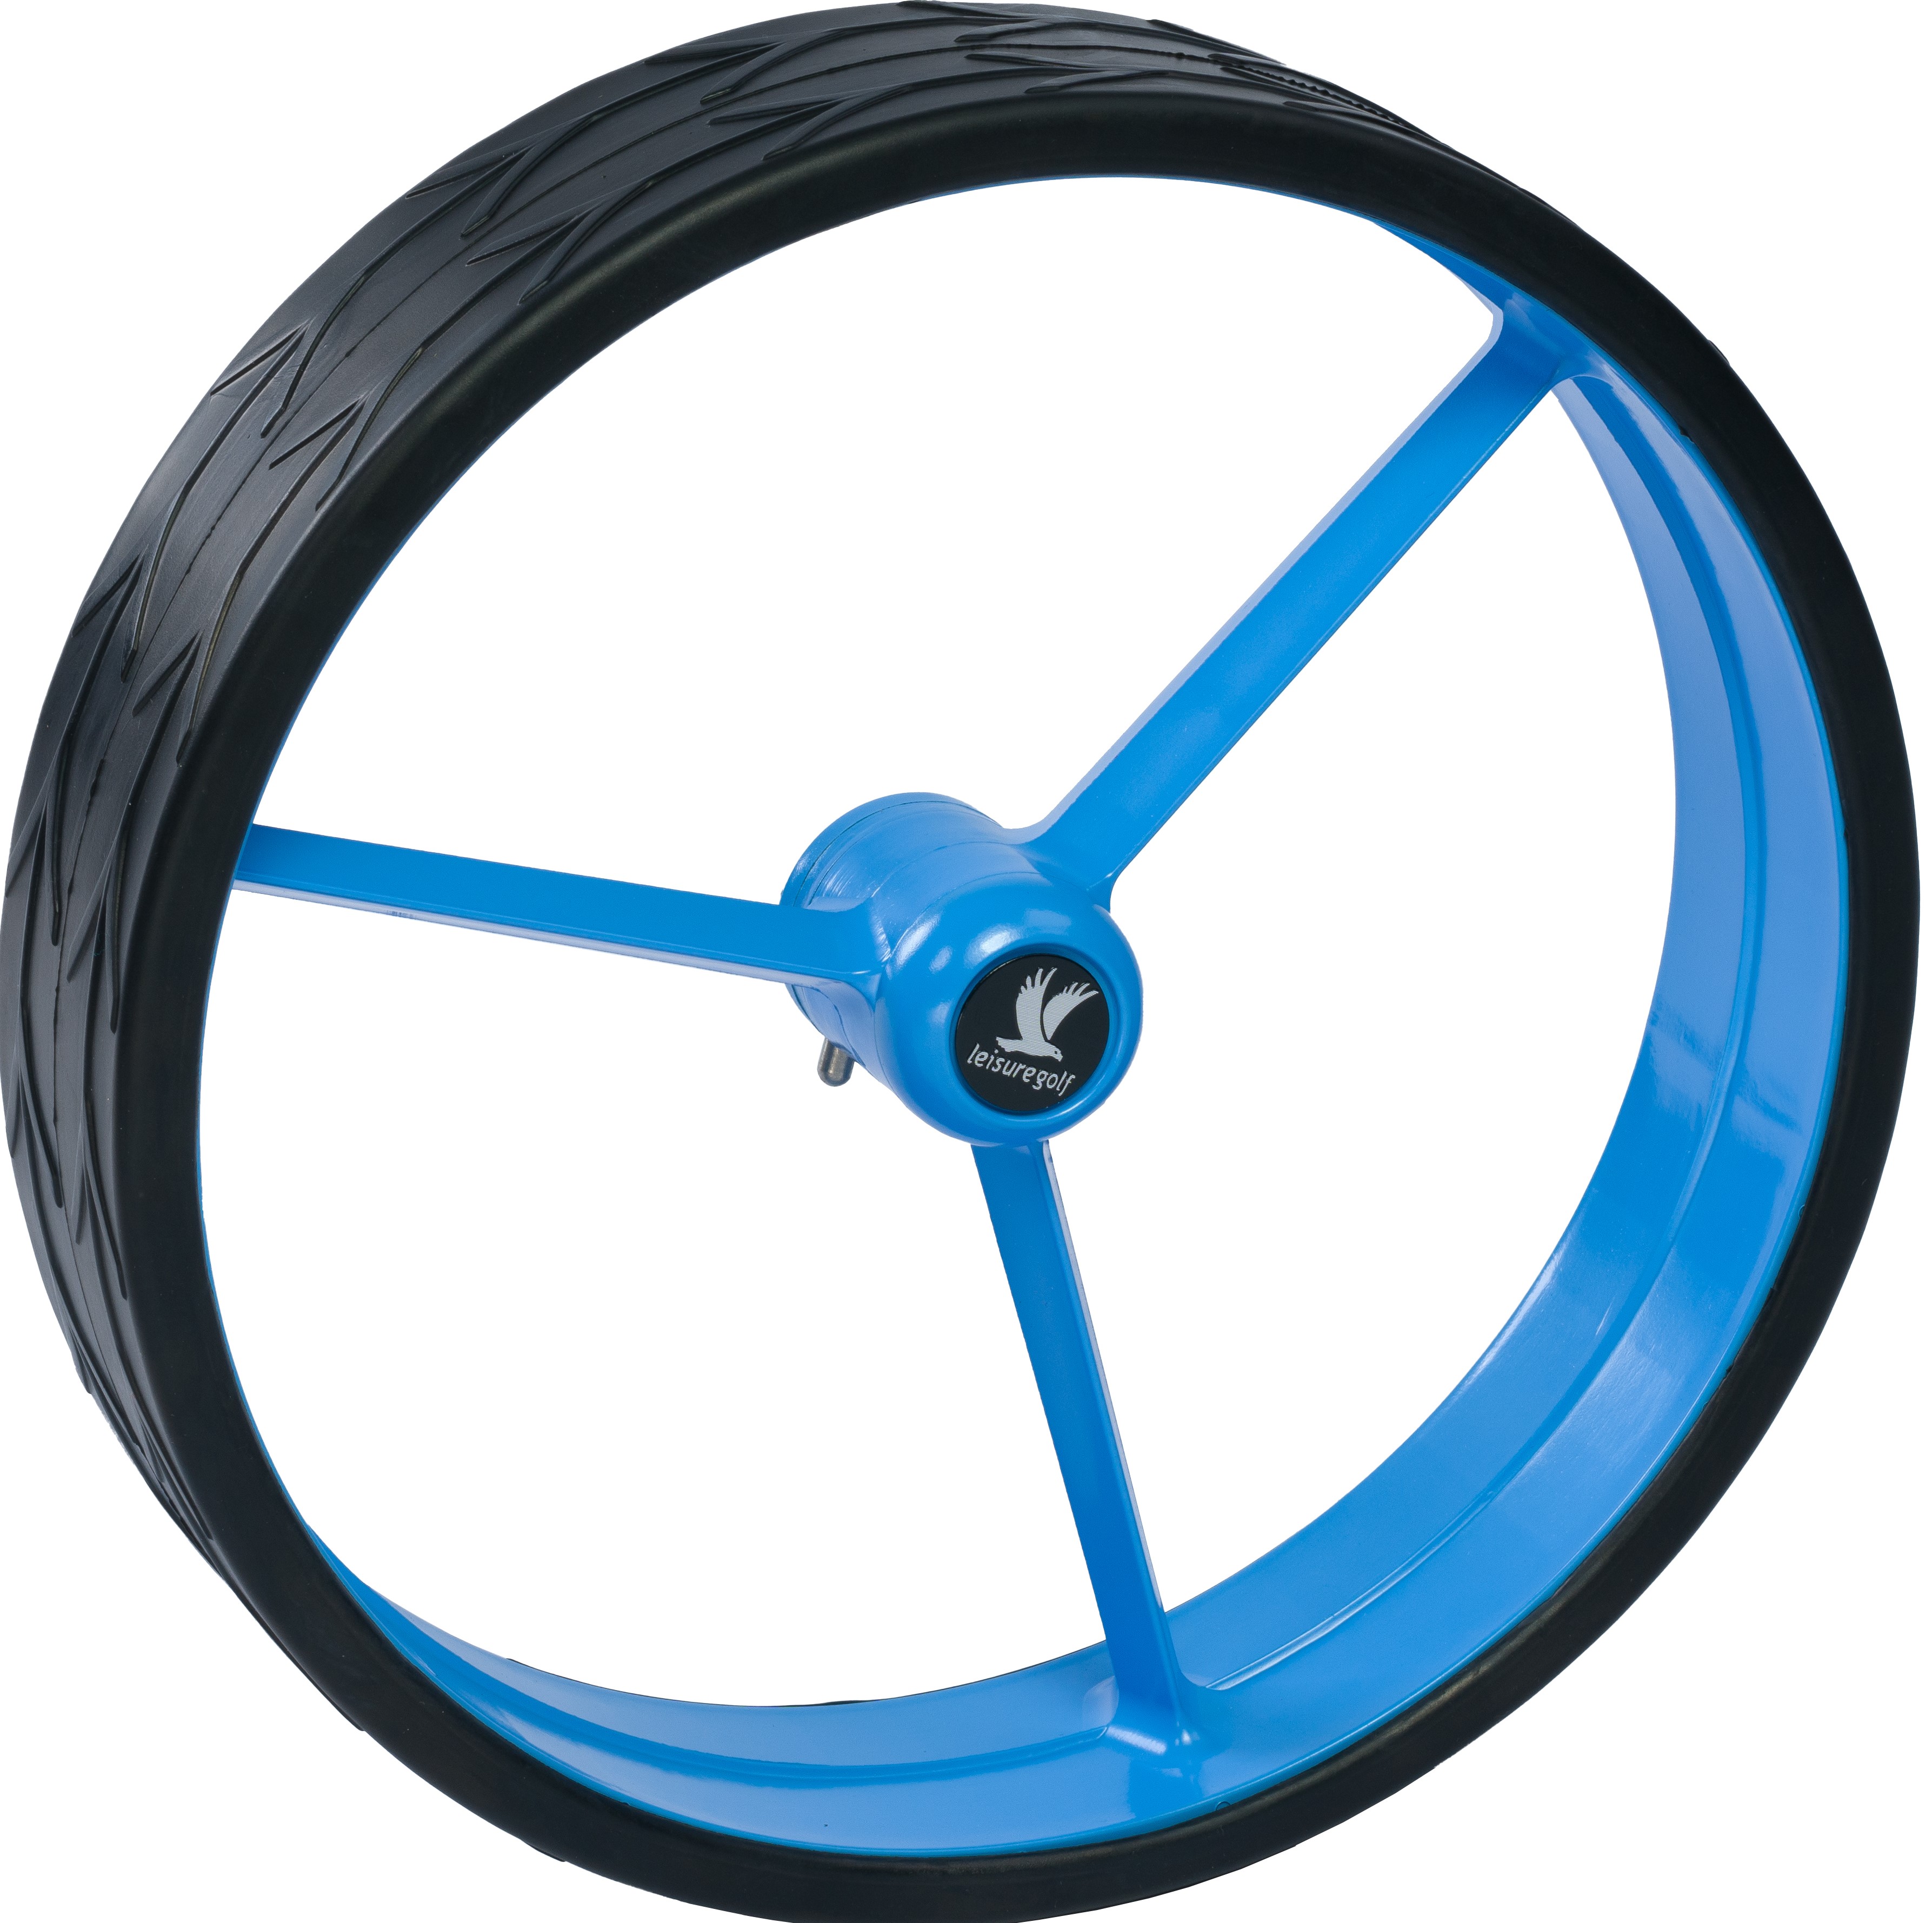 Wheel set blue